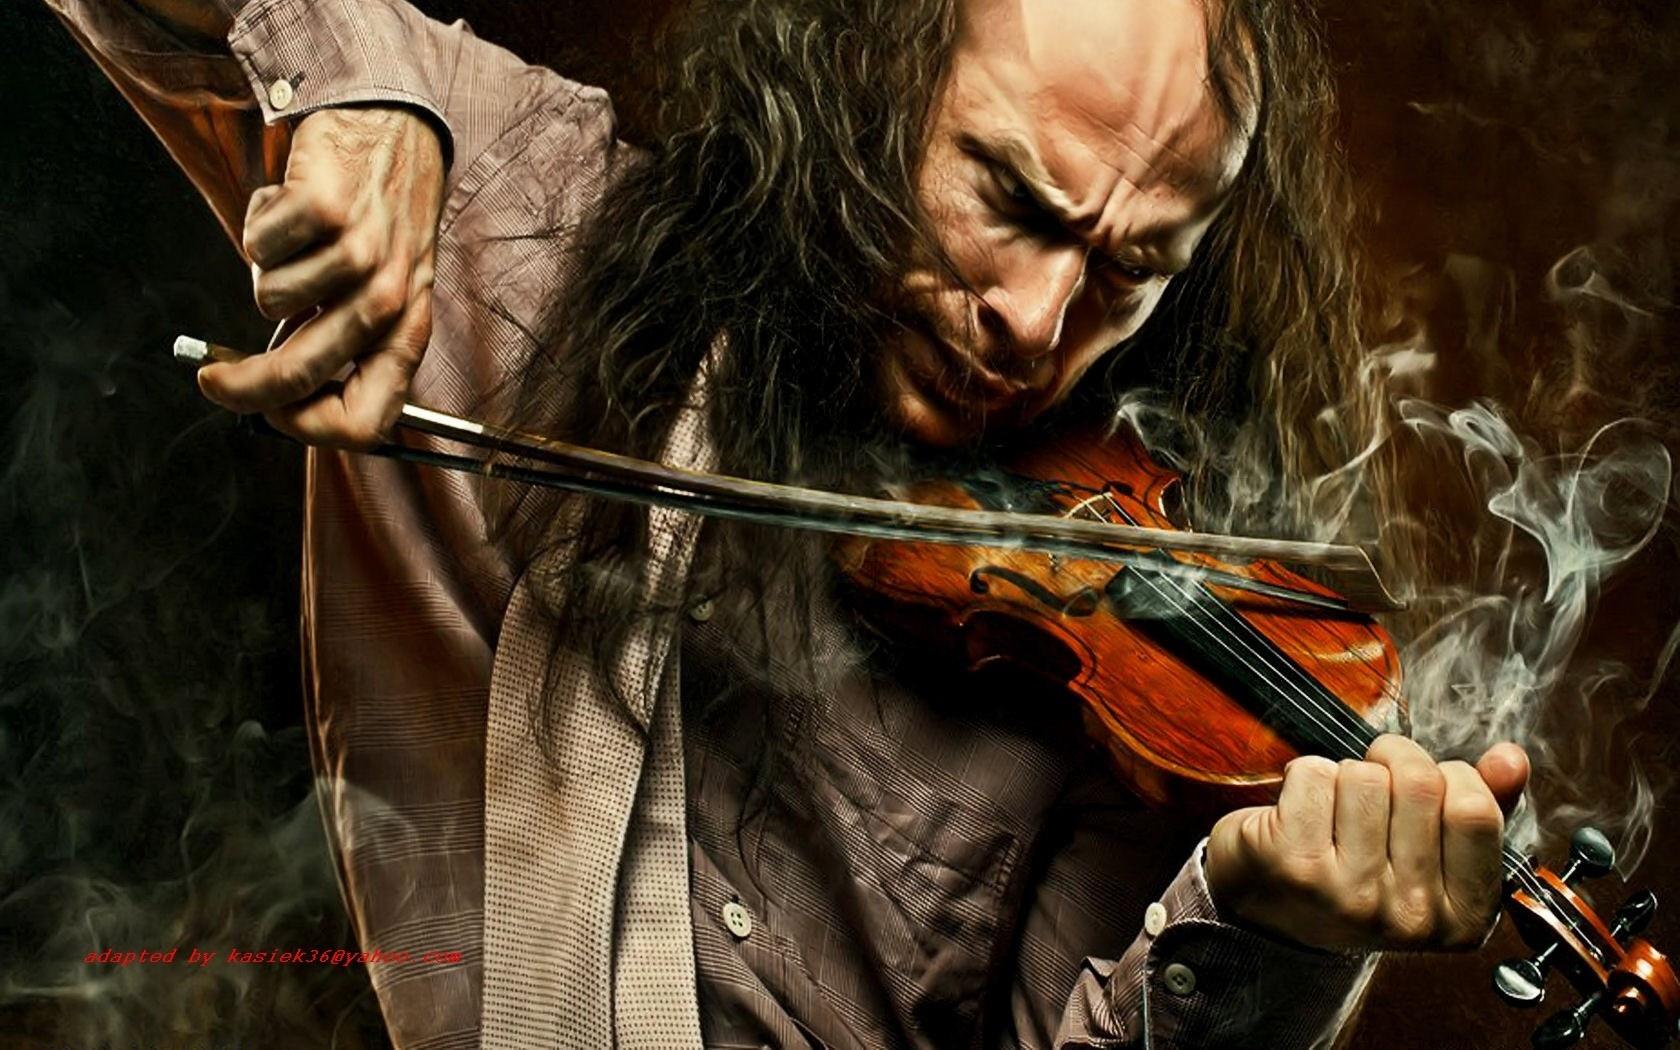 Паганини соло. Никколо Паганини скрипач дьявола арт. Паганини Адский скрипач. Юный Паганини.